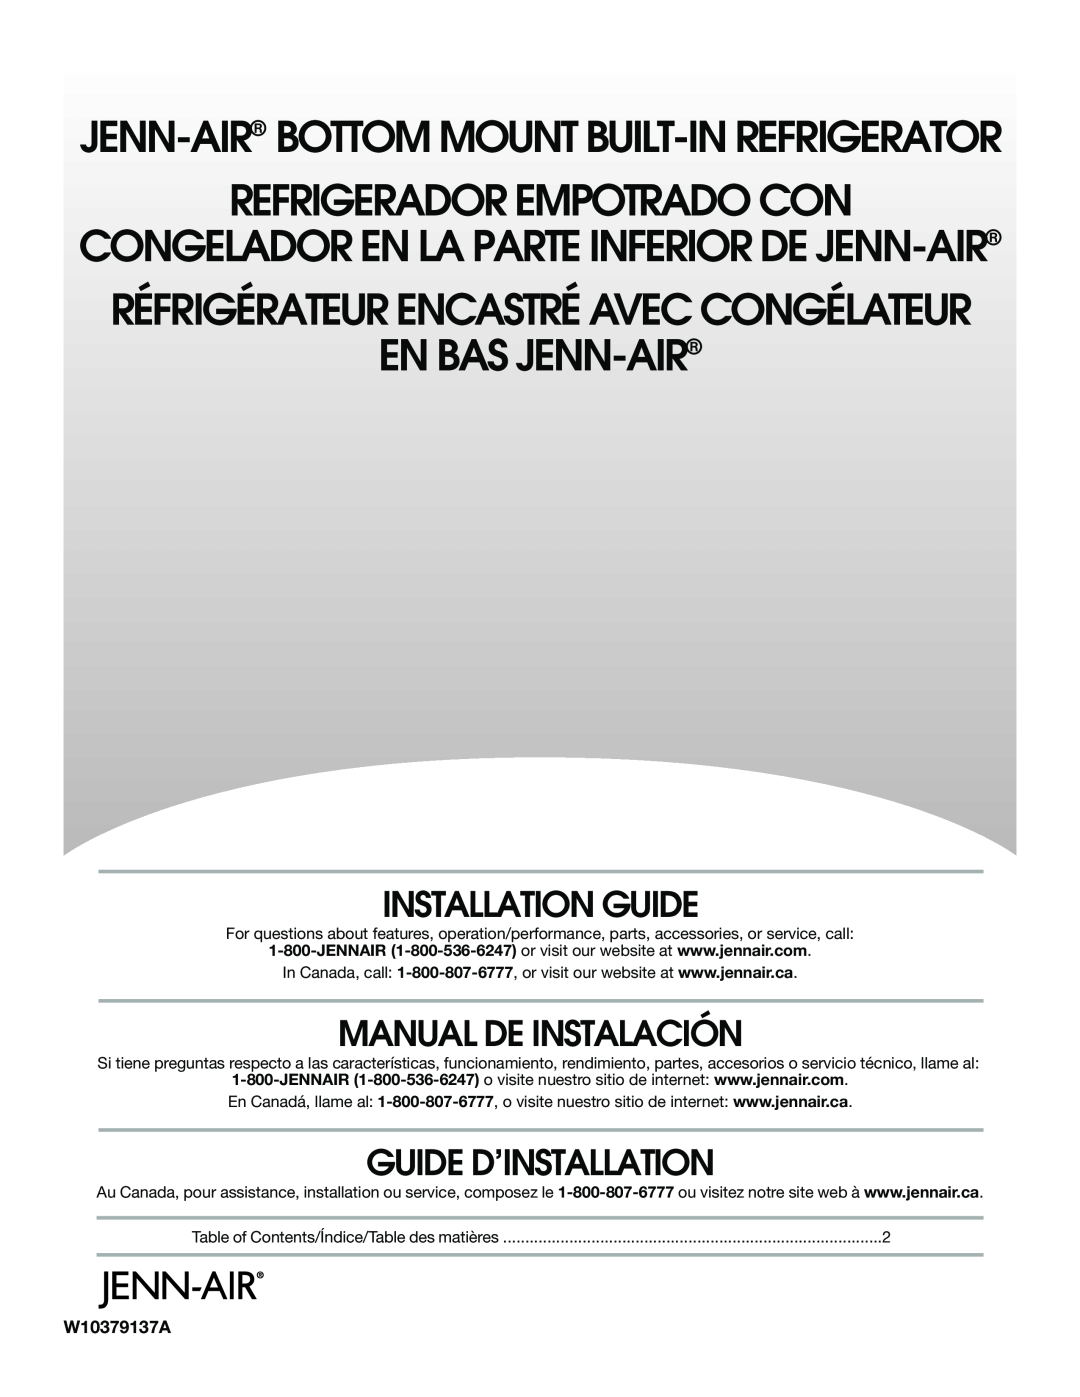 Jenn-Air W10379137A manual Installation Guide, Manual De Instalación, Guide D’Installation, Refrigerador Empotrado Con 